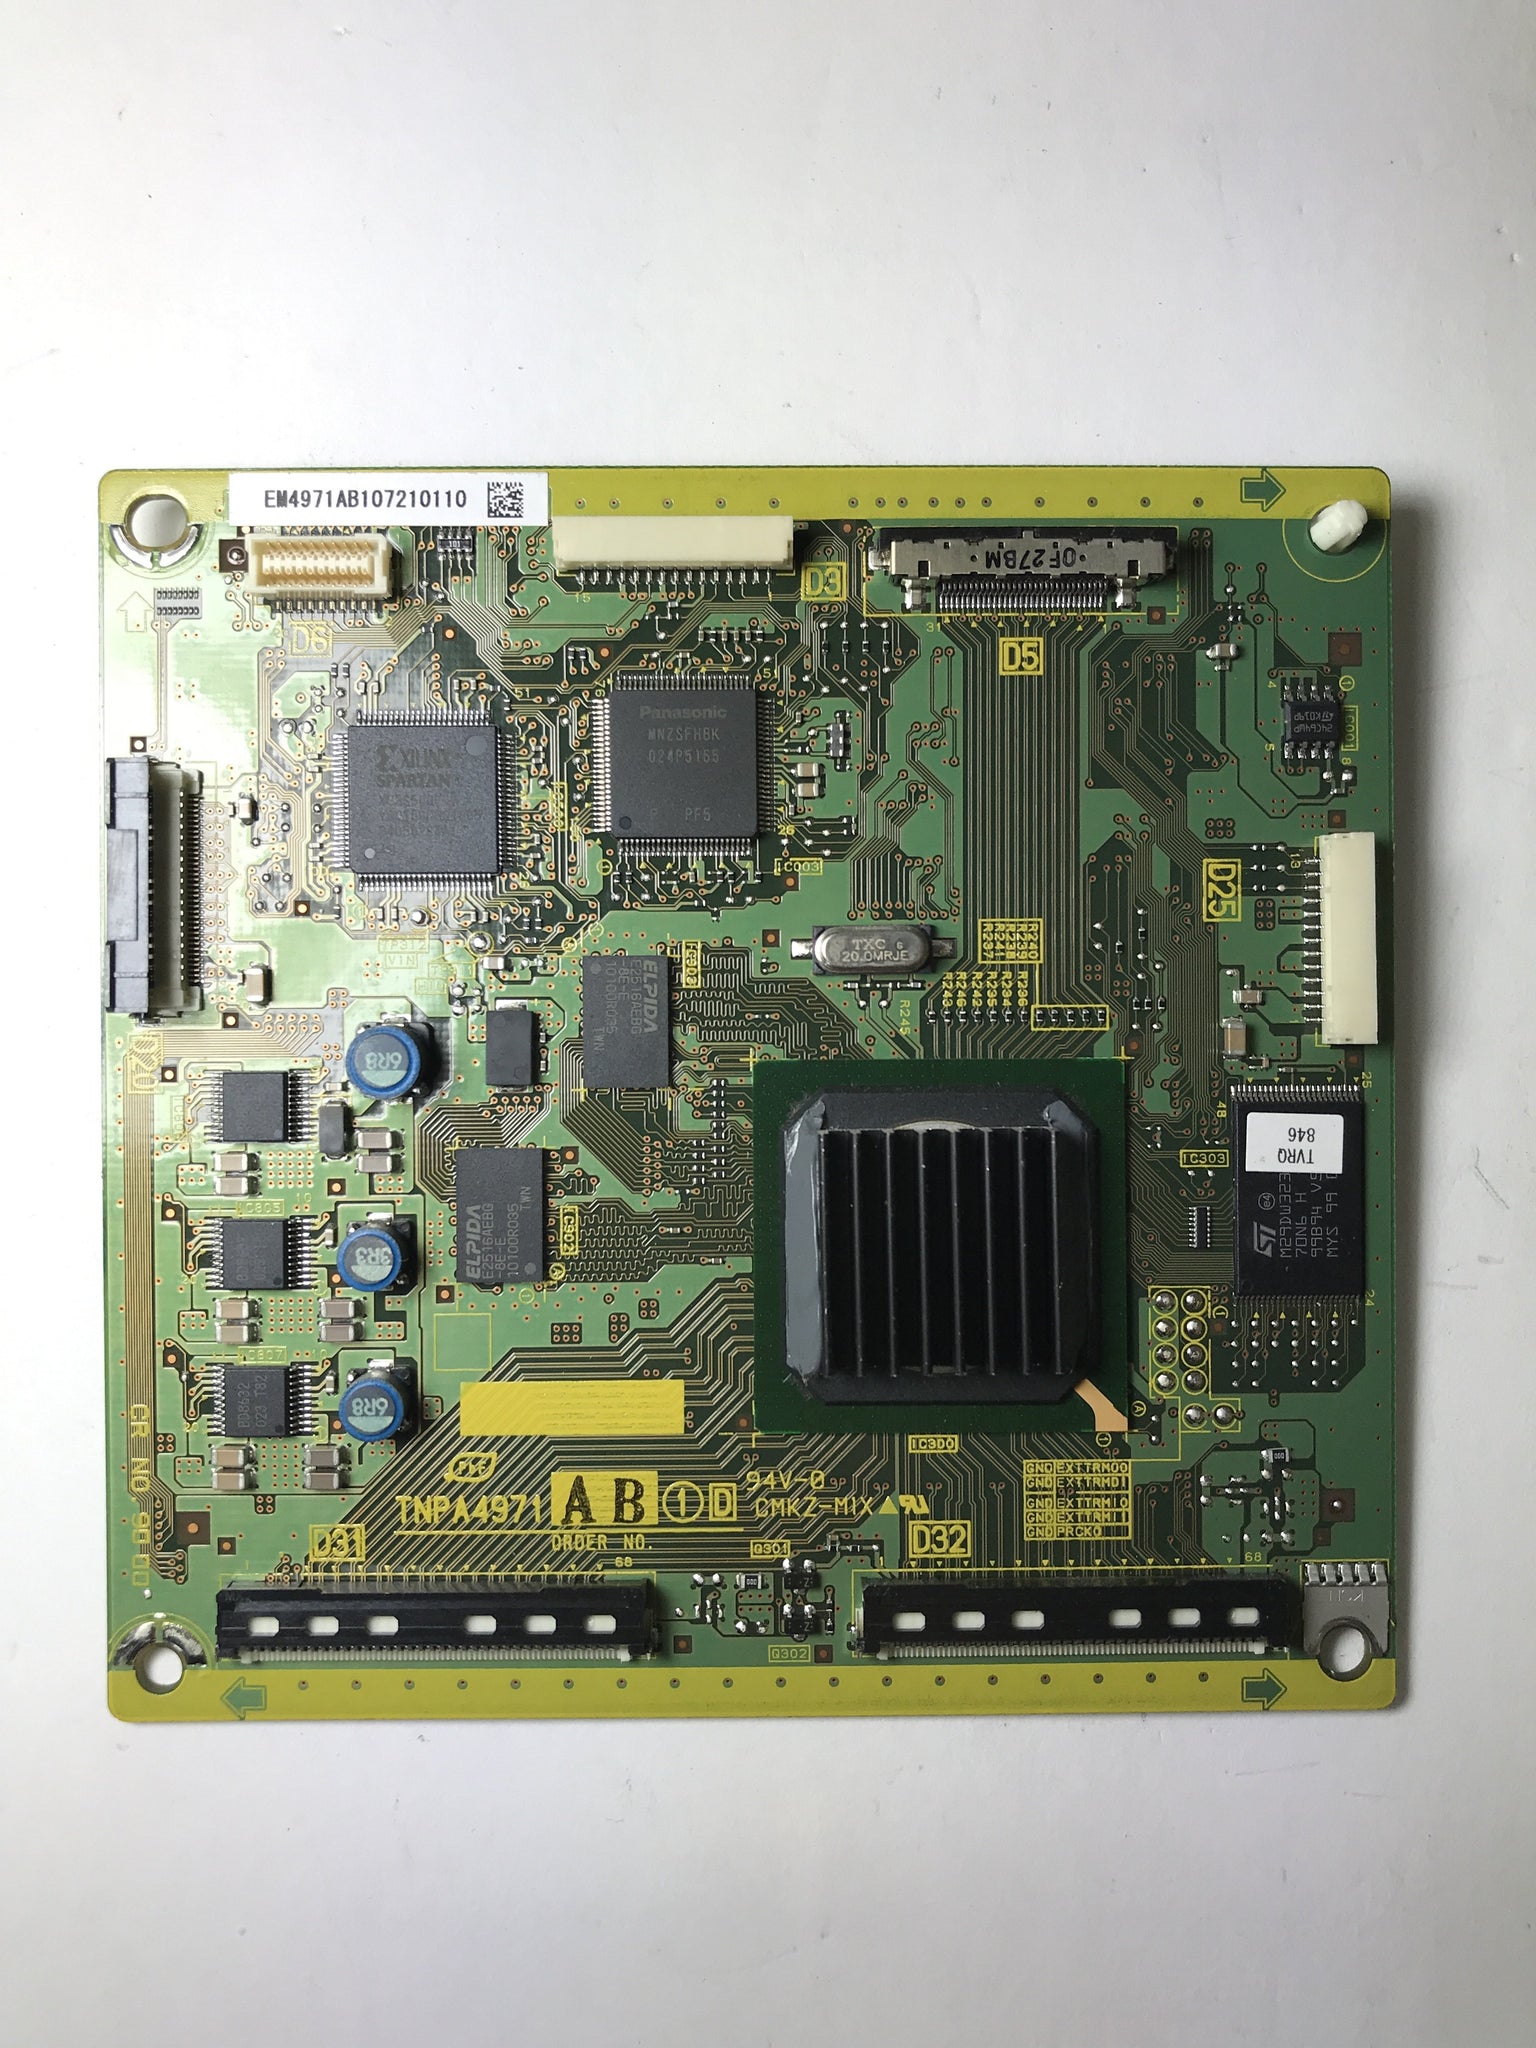 Panasonic TXNDN11LBU D Board (TNPA4971AB)